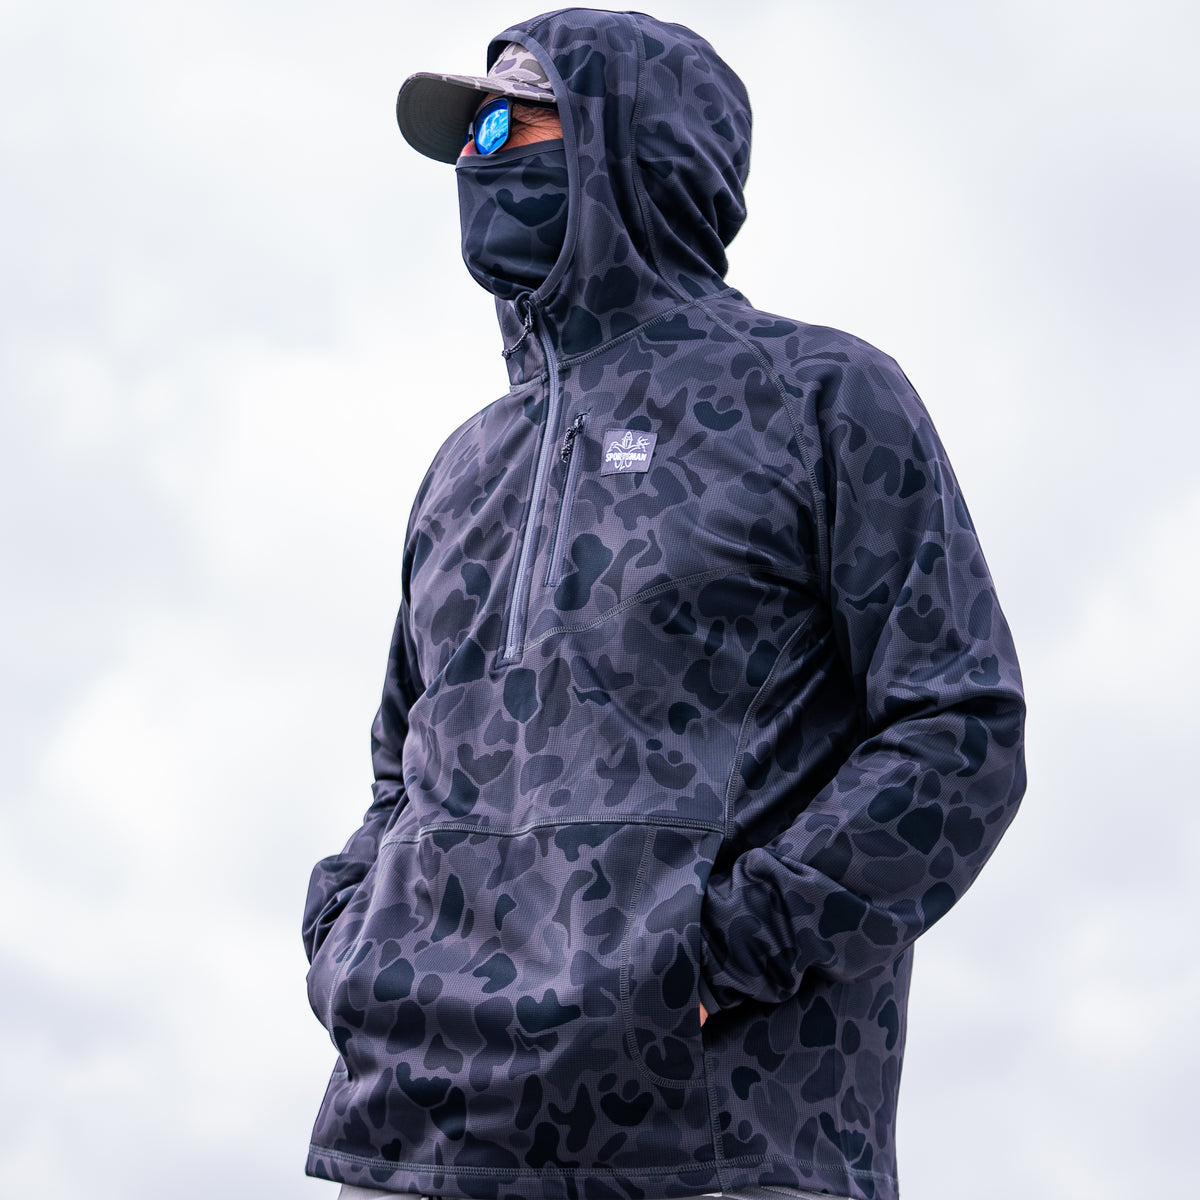 Sportsman Gear Reaper: Quick Dry Lightweight Fishing Shorts Grey / X-Large